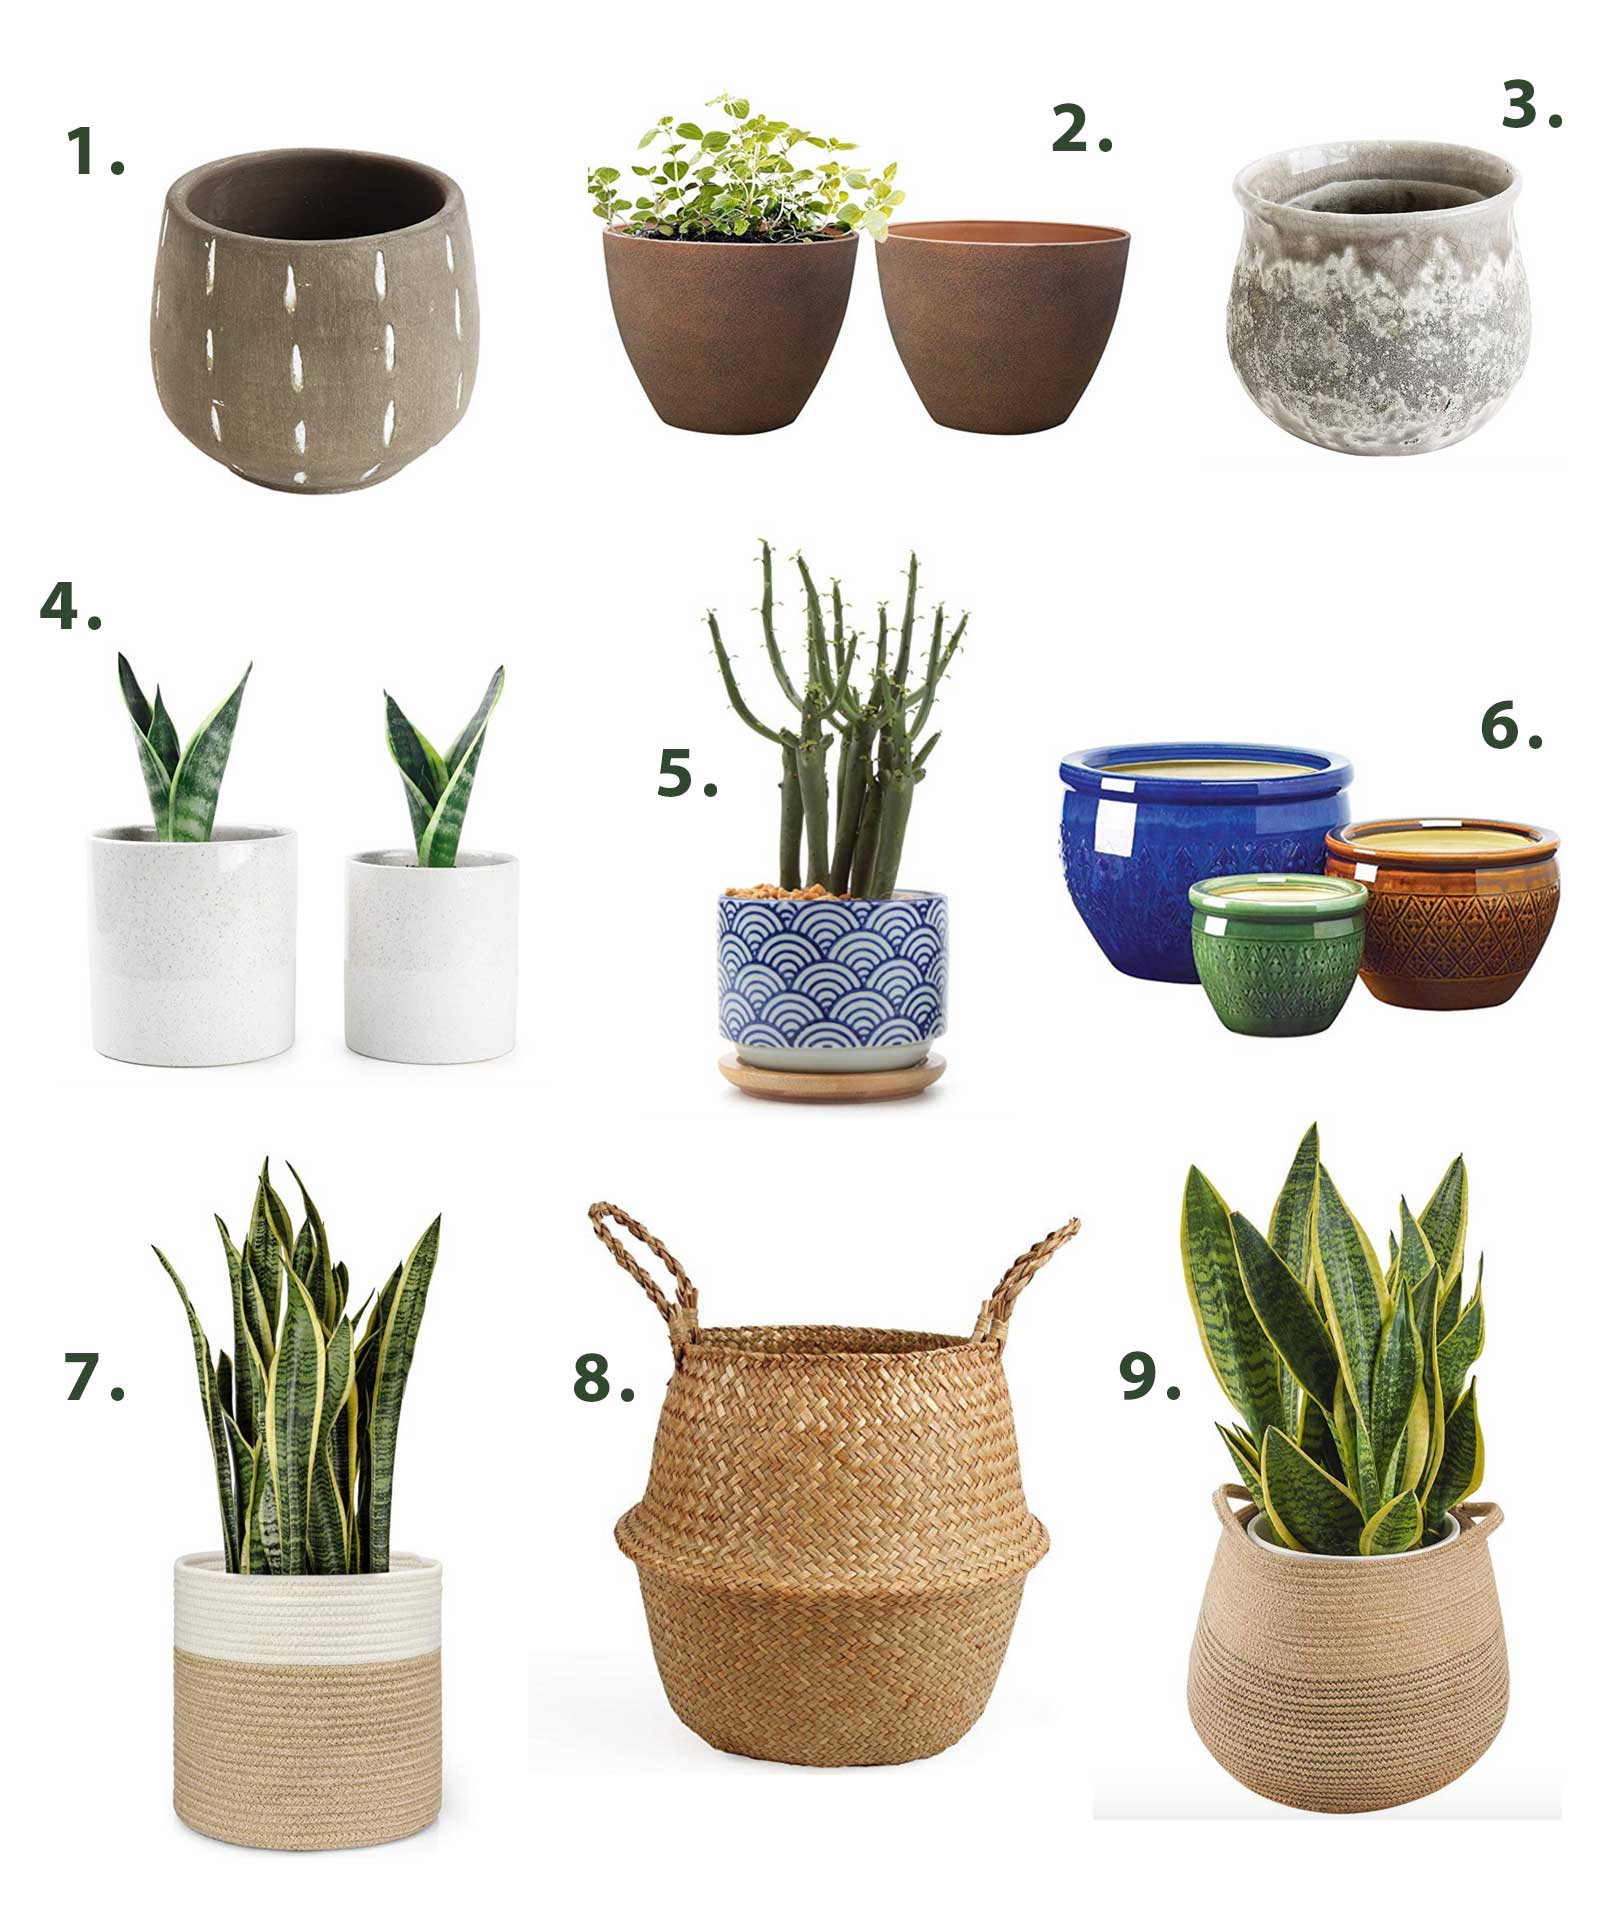 Plastic-Free plant pot options